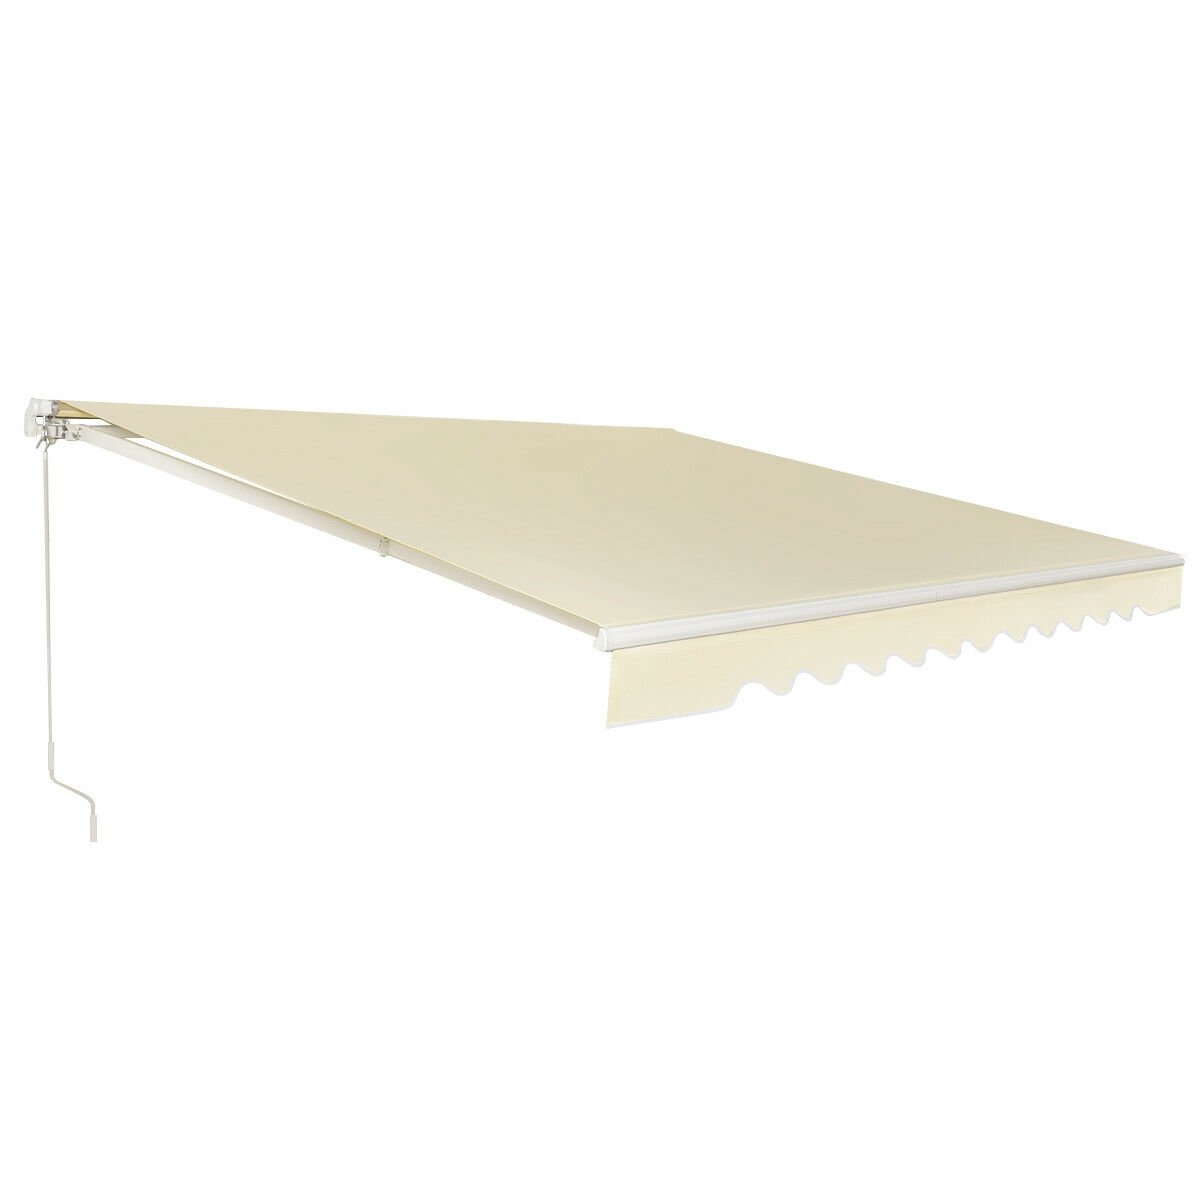 13 × 8 Feet Retractable Patio Awning Aluminum Deck Sunshade, Beige - Gallery Canada